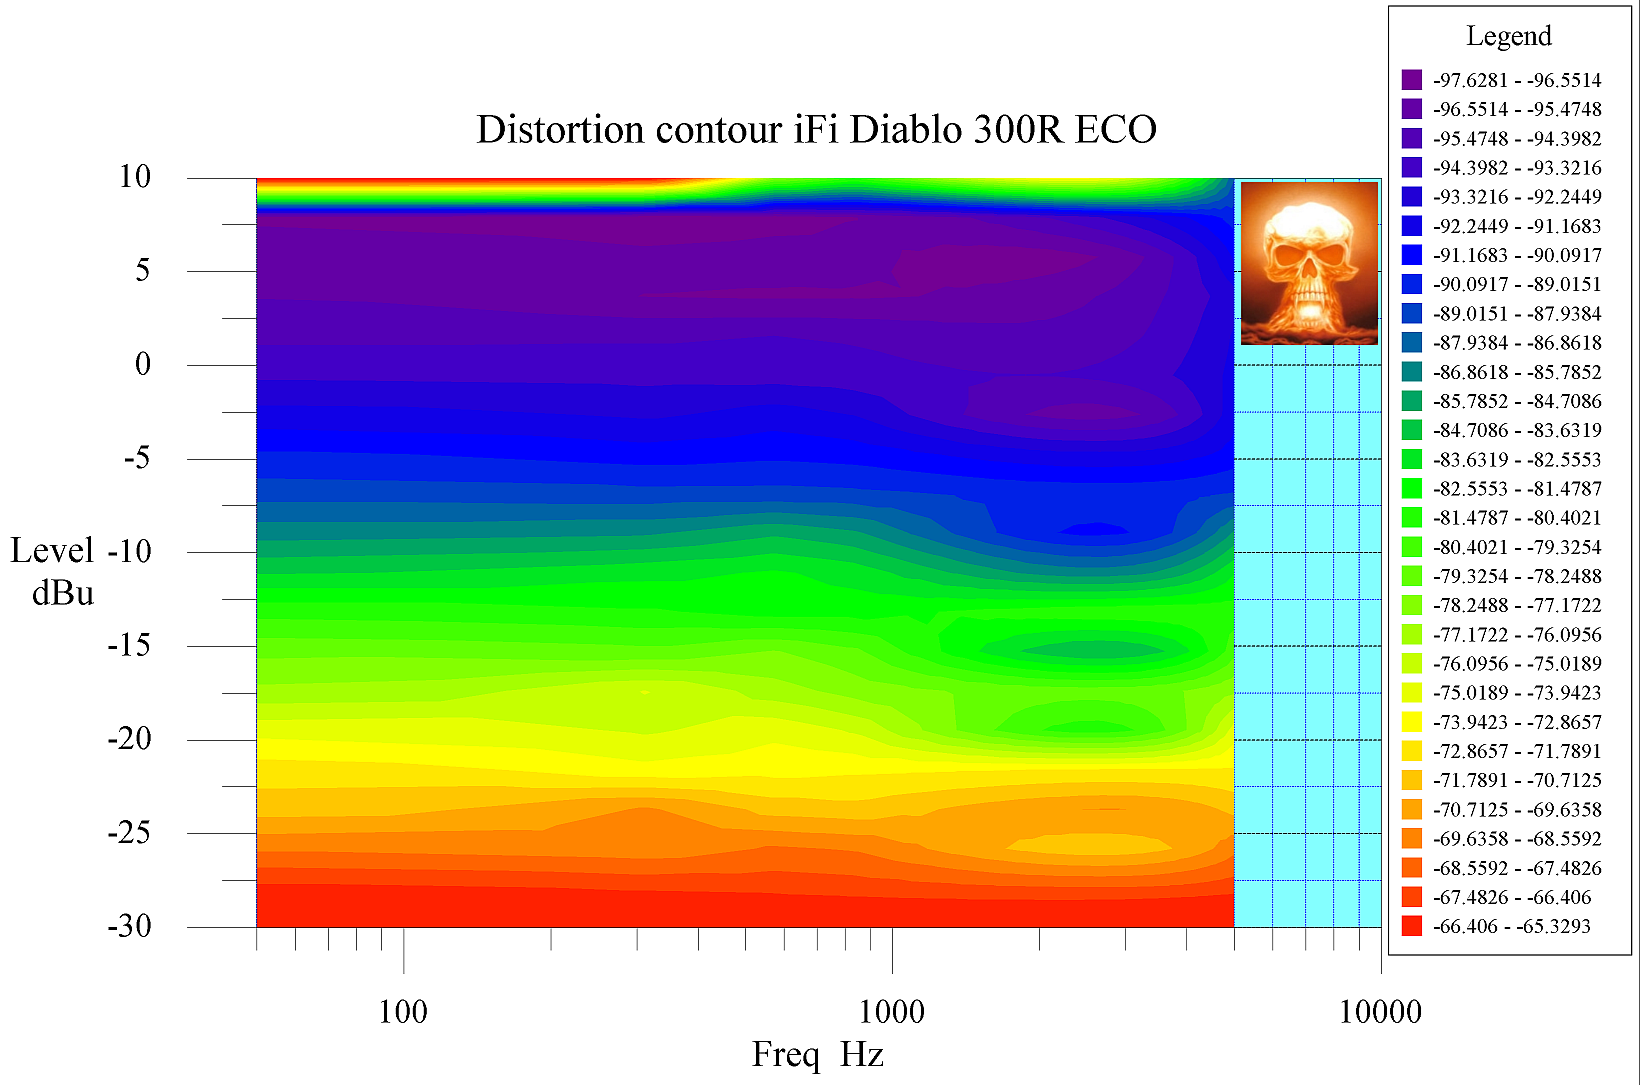 Distortion surface iFi Diablo 300R ECO 5 dBu max wm small.png